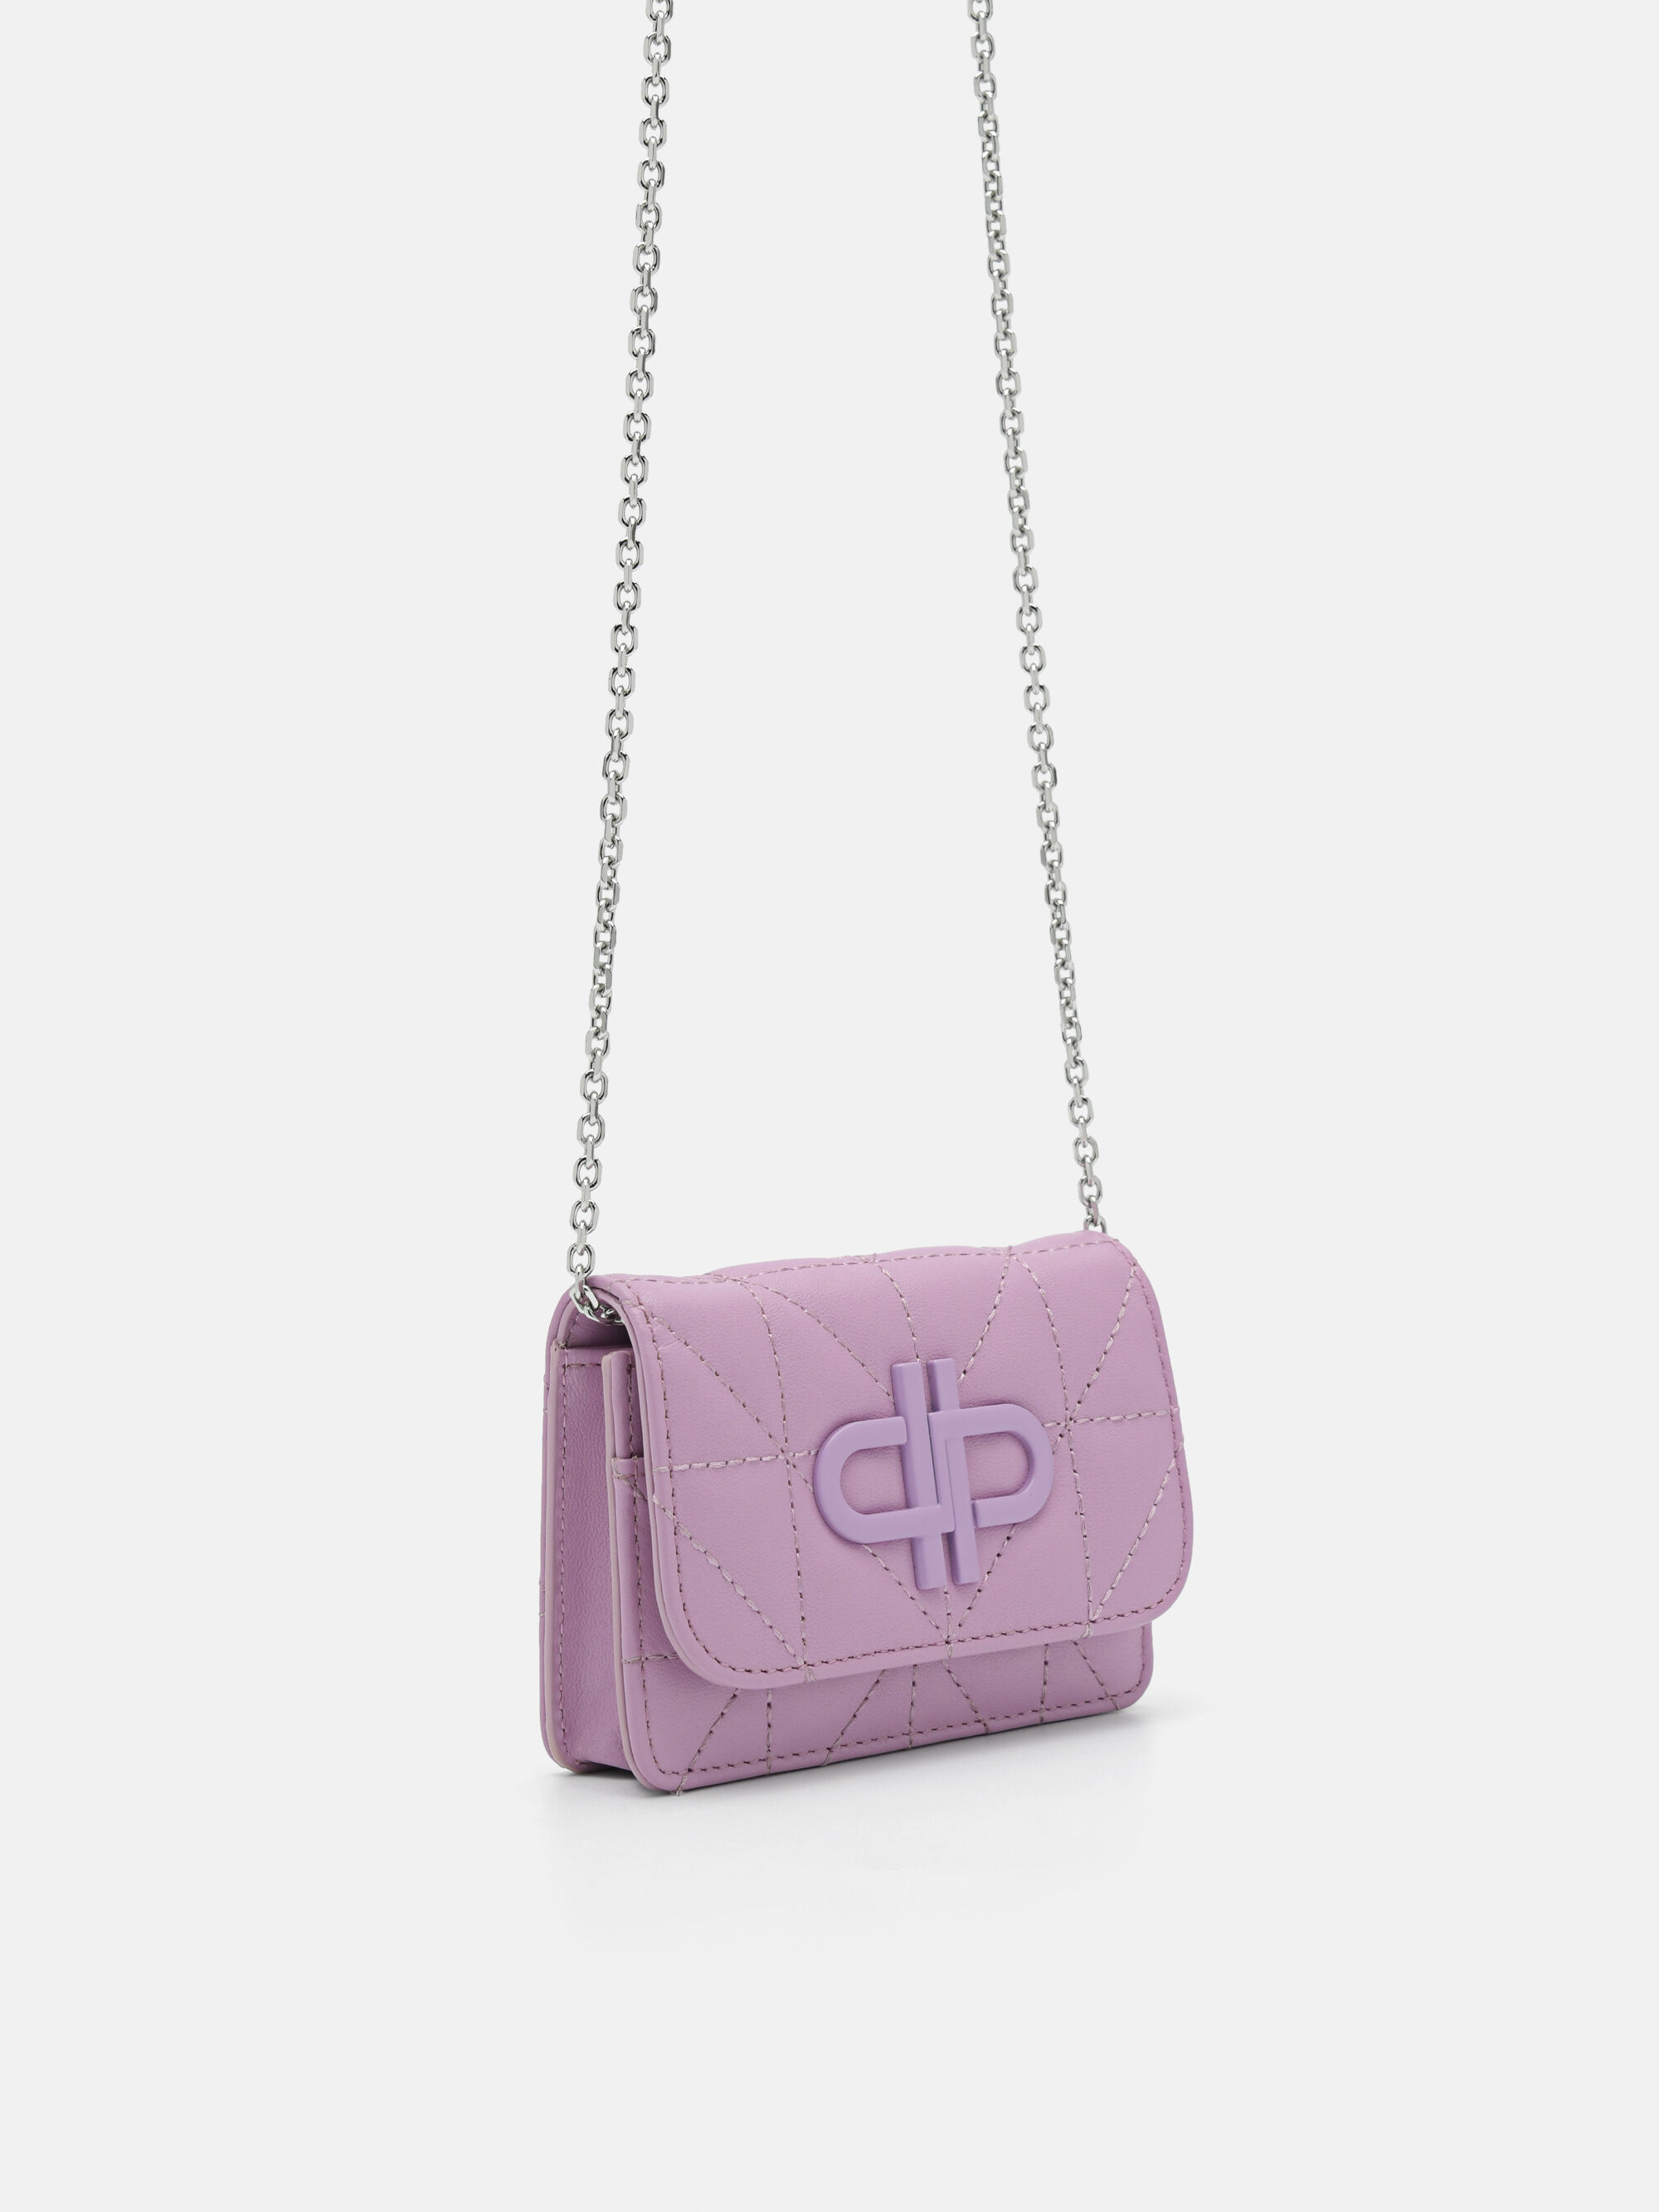 PEDRO Icon Leather Bi-Fold Card Holder in Pixel, Purple